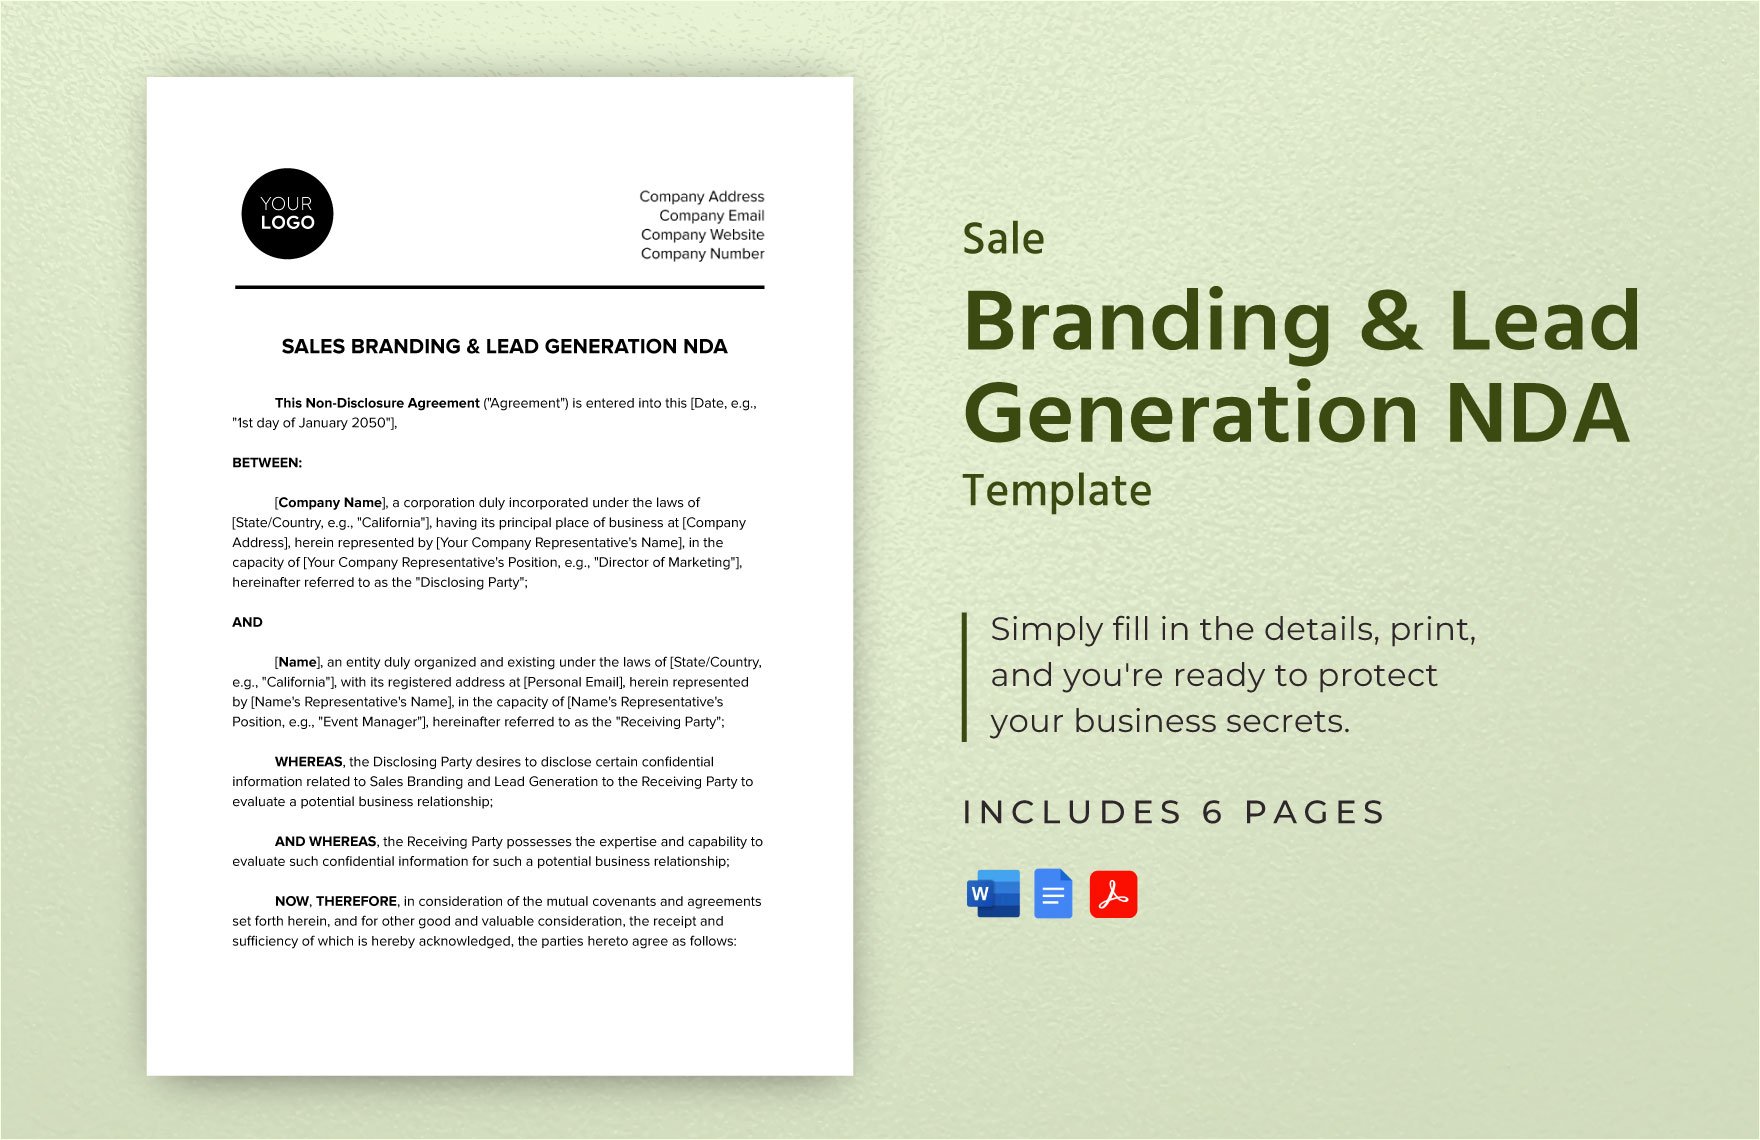 Sales Branding & Lead Generation NDA Template in Word, Google Docs, PDF